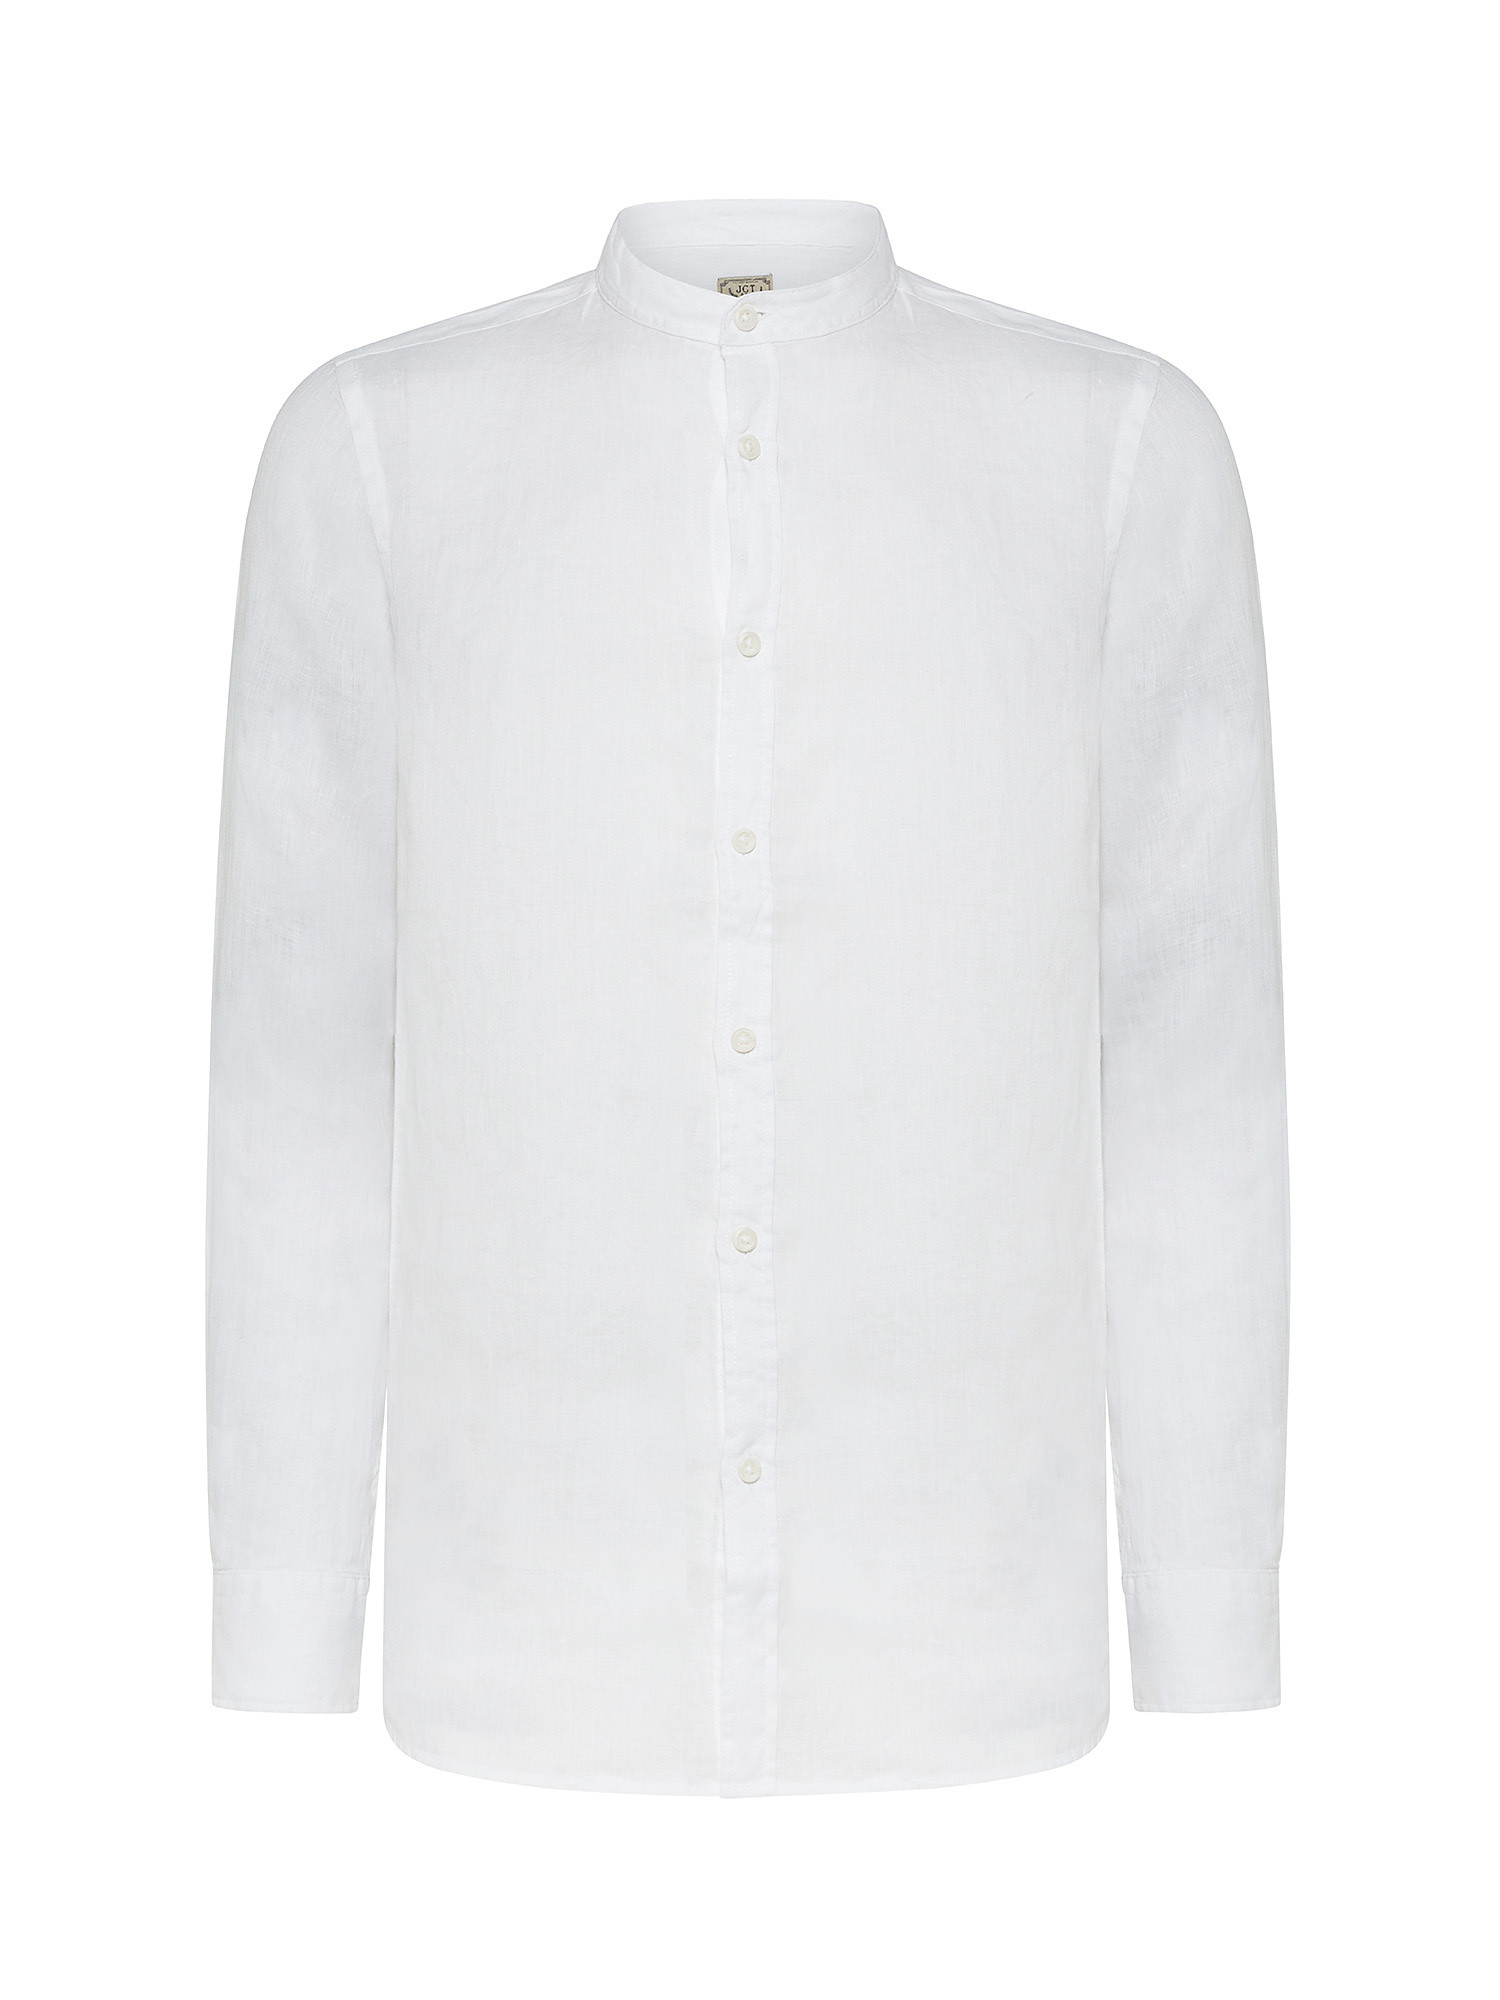 JCT - Camicia coreana in puro lino, Bianco, large image number 0